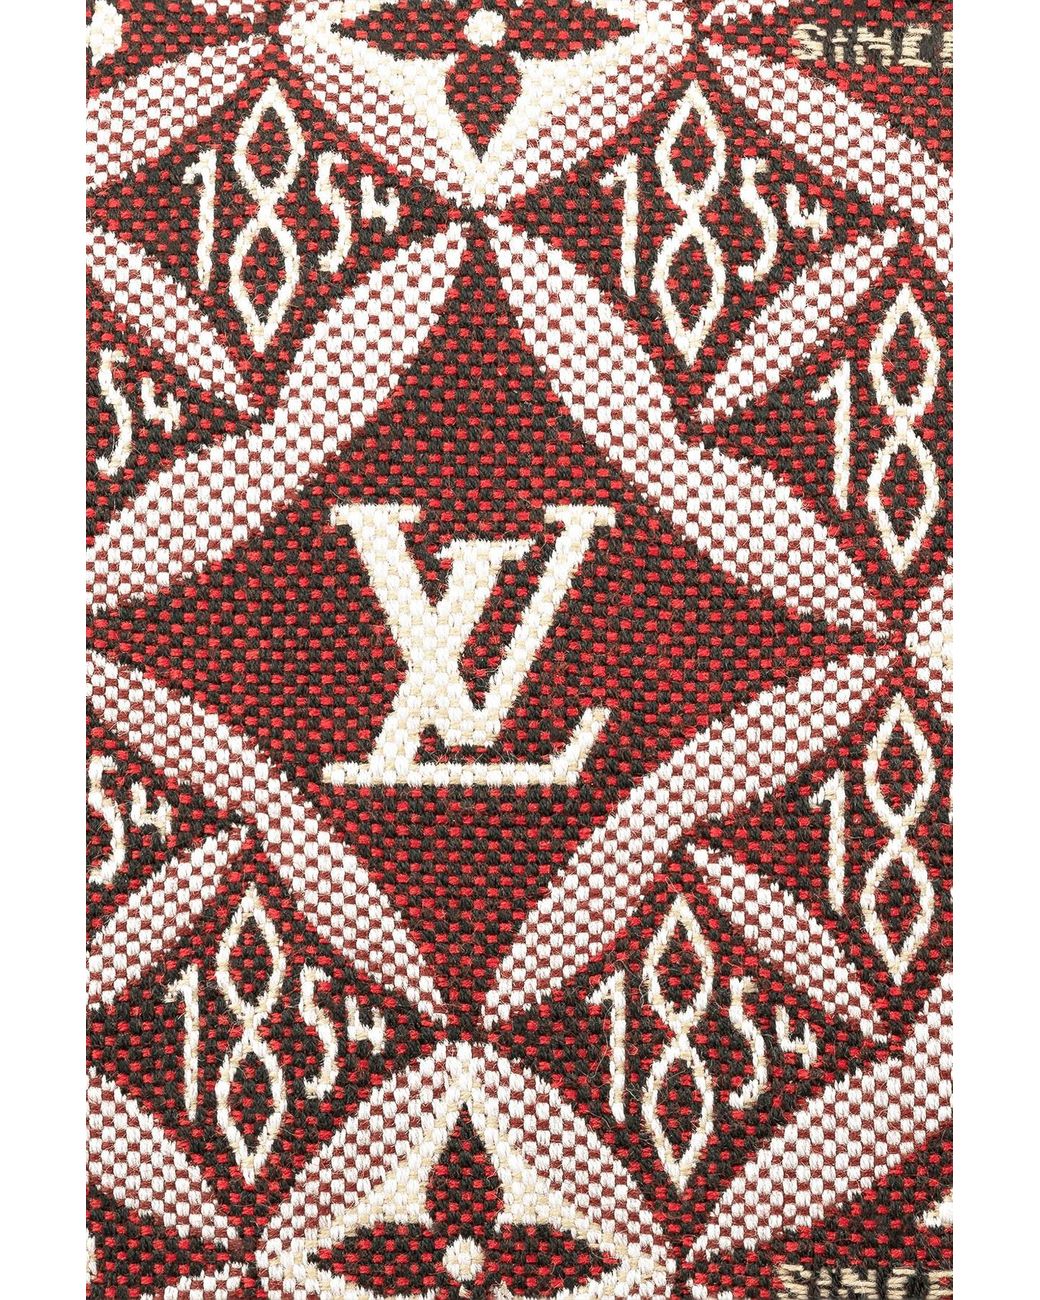 Louis Vuitton Since 1854 Speedy Bandoulière 25 in Brown